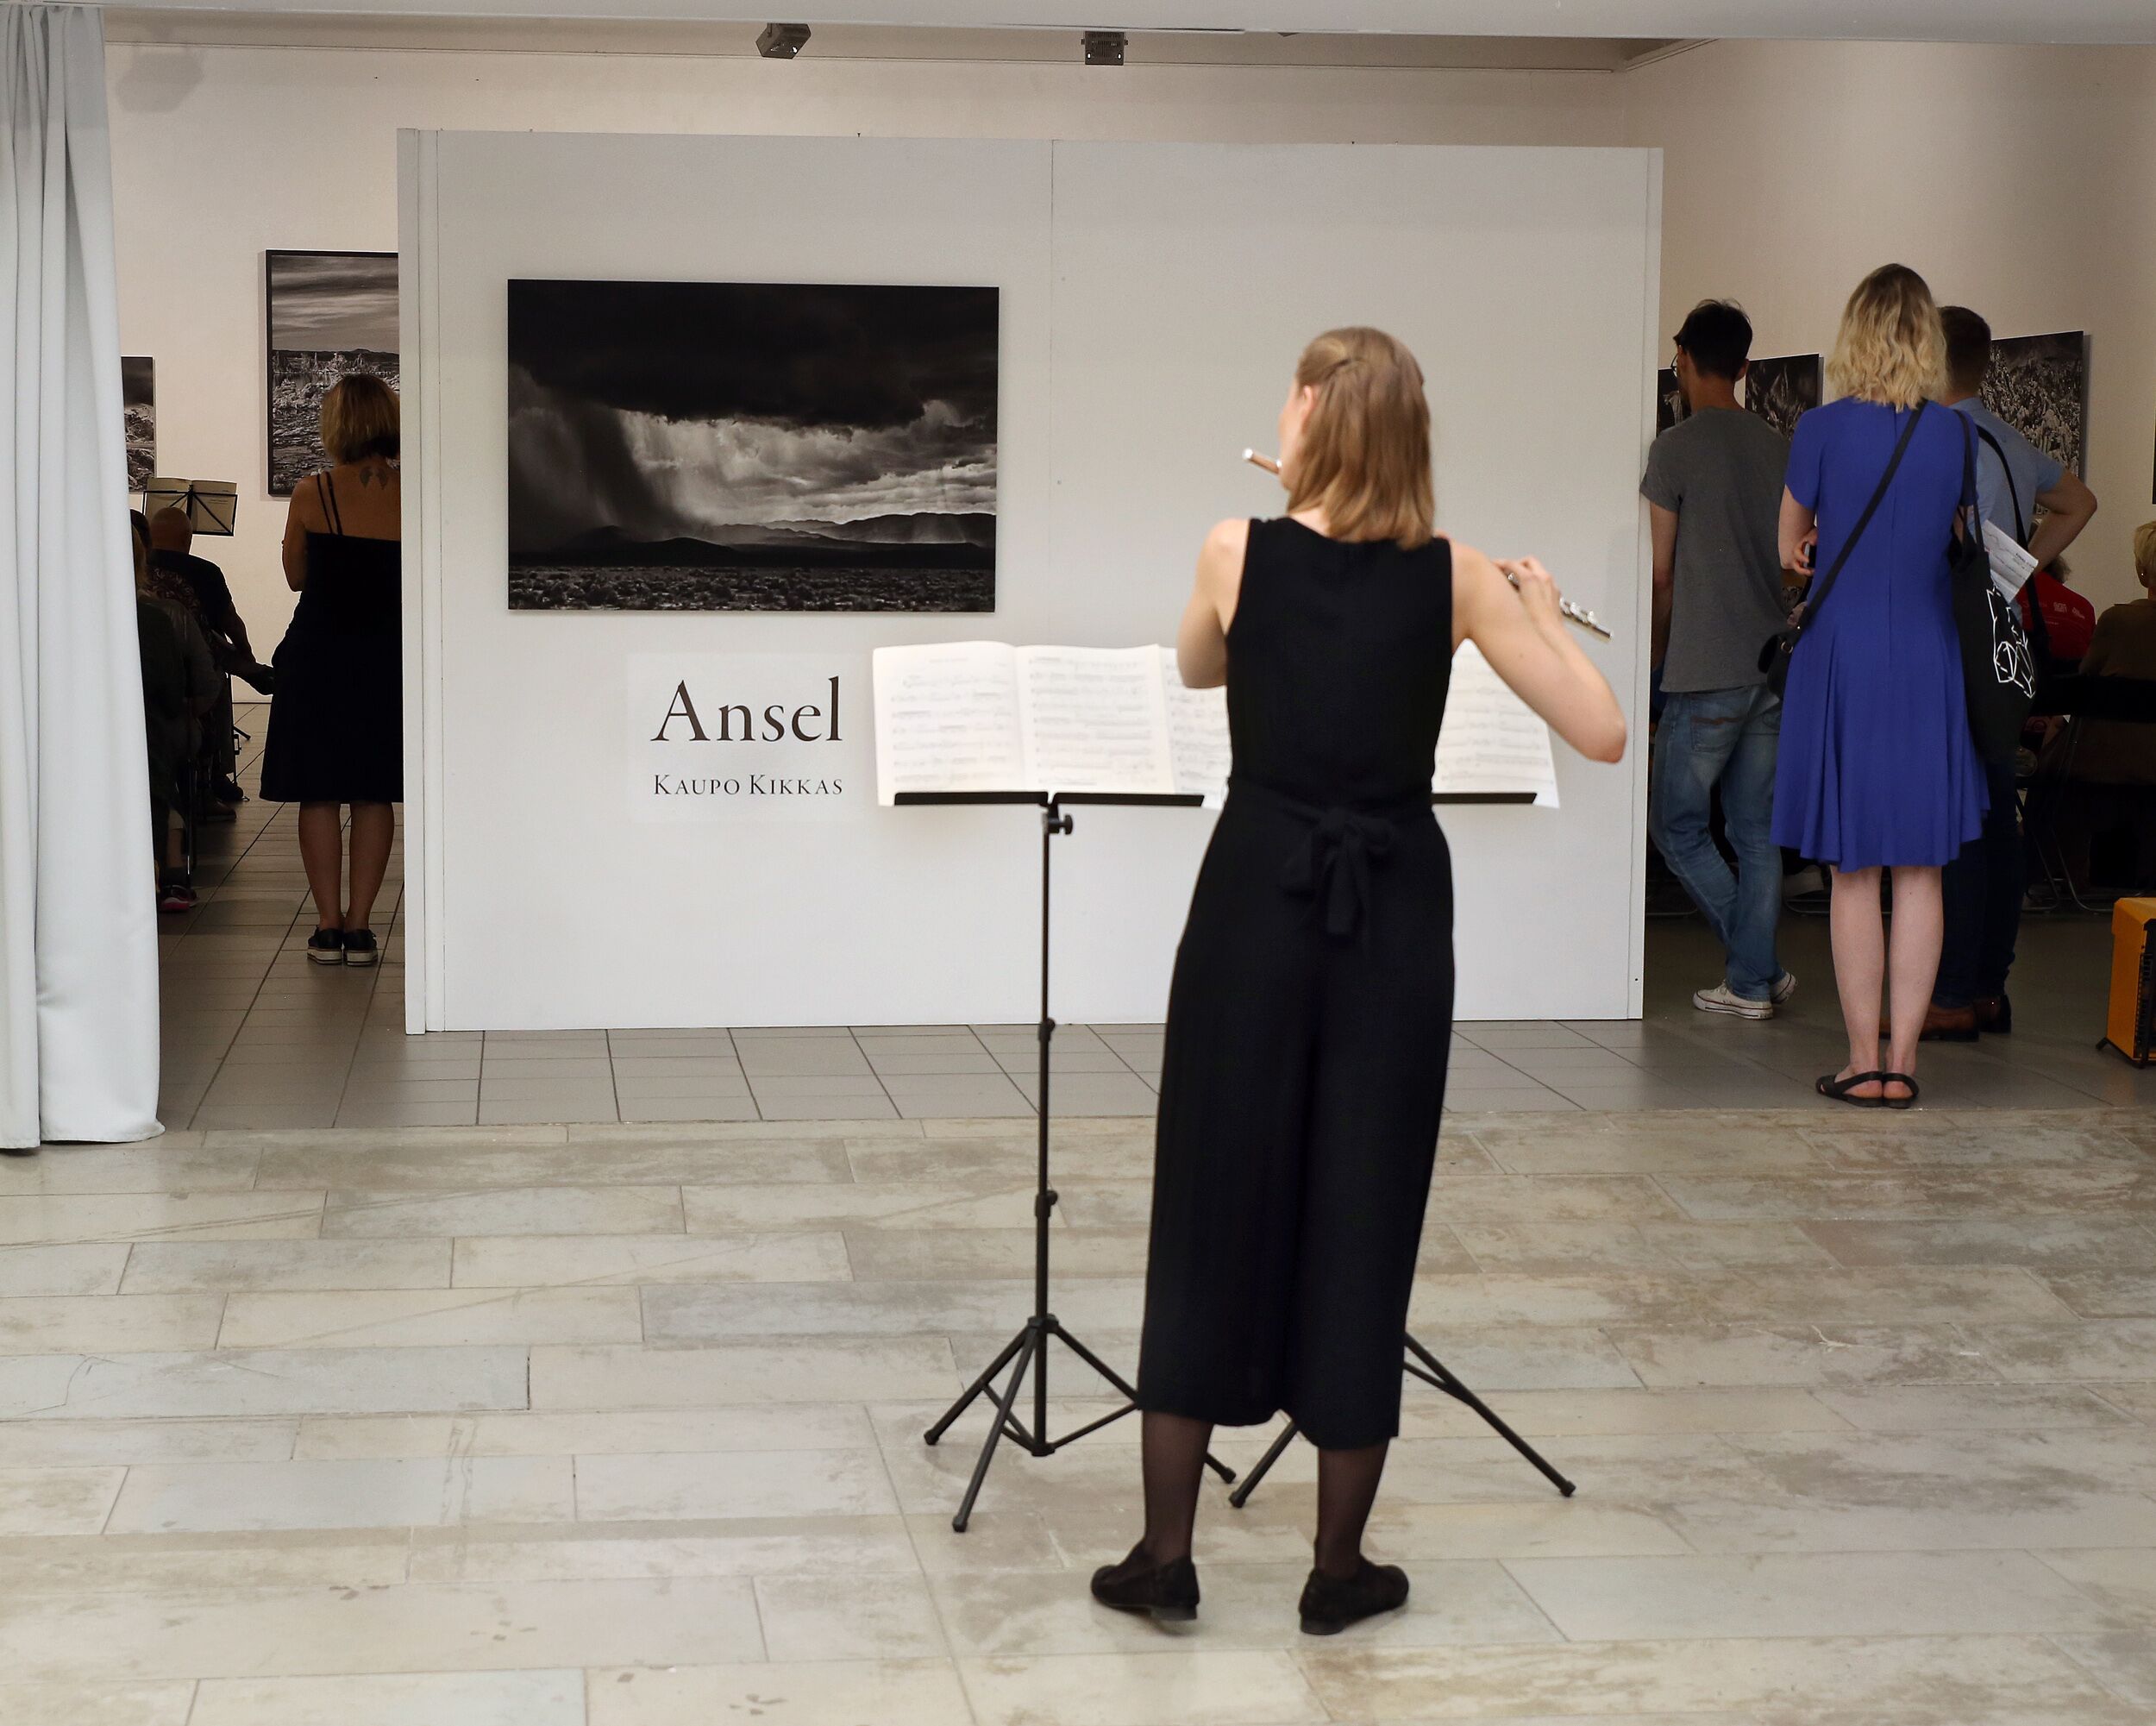 Maria Luisk at Kaupo Kikkas's Ansel exhibition concert